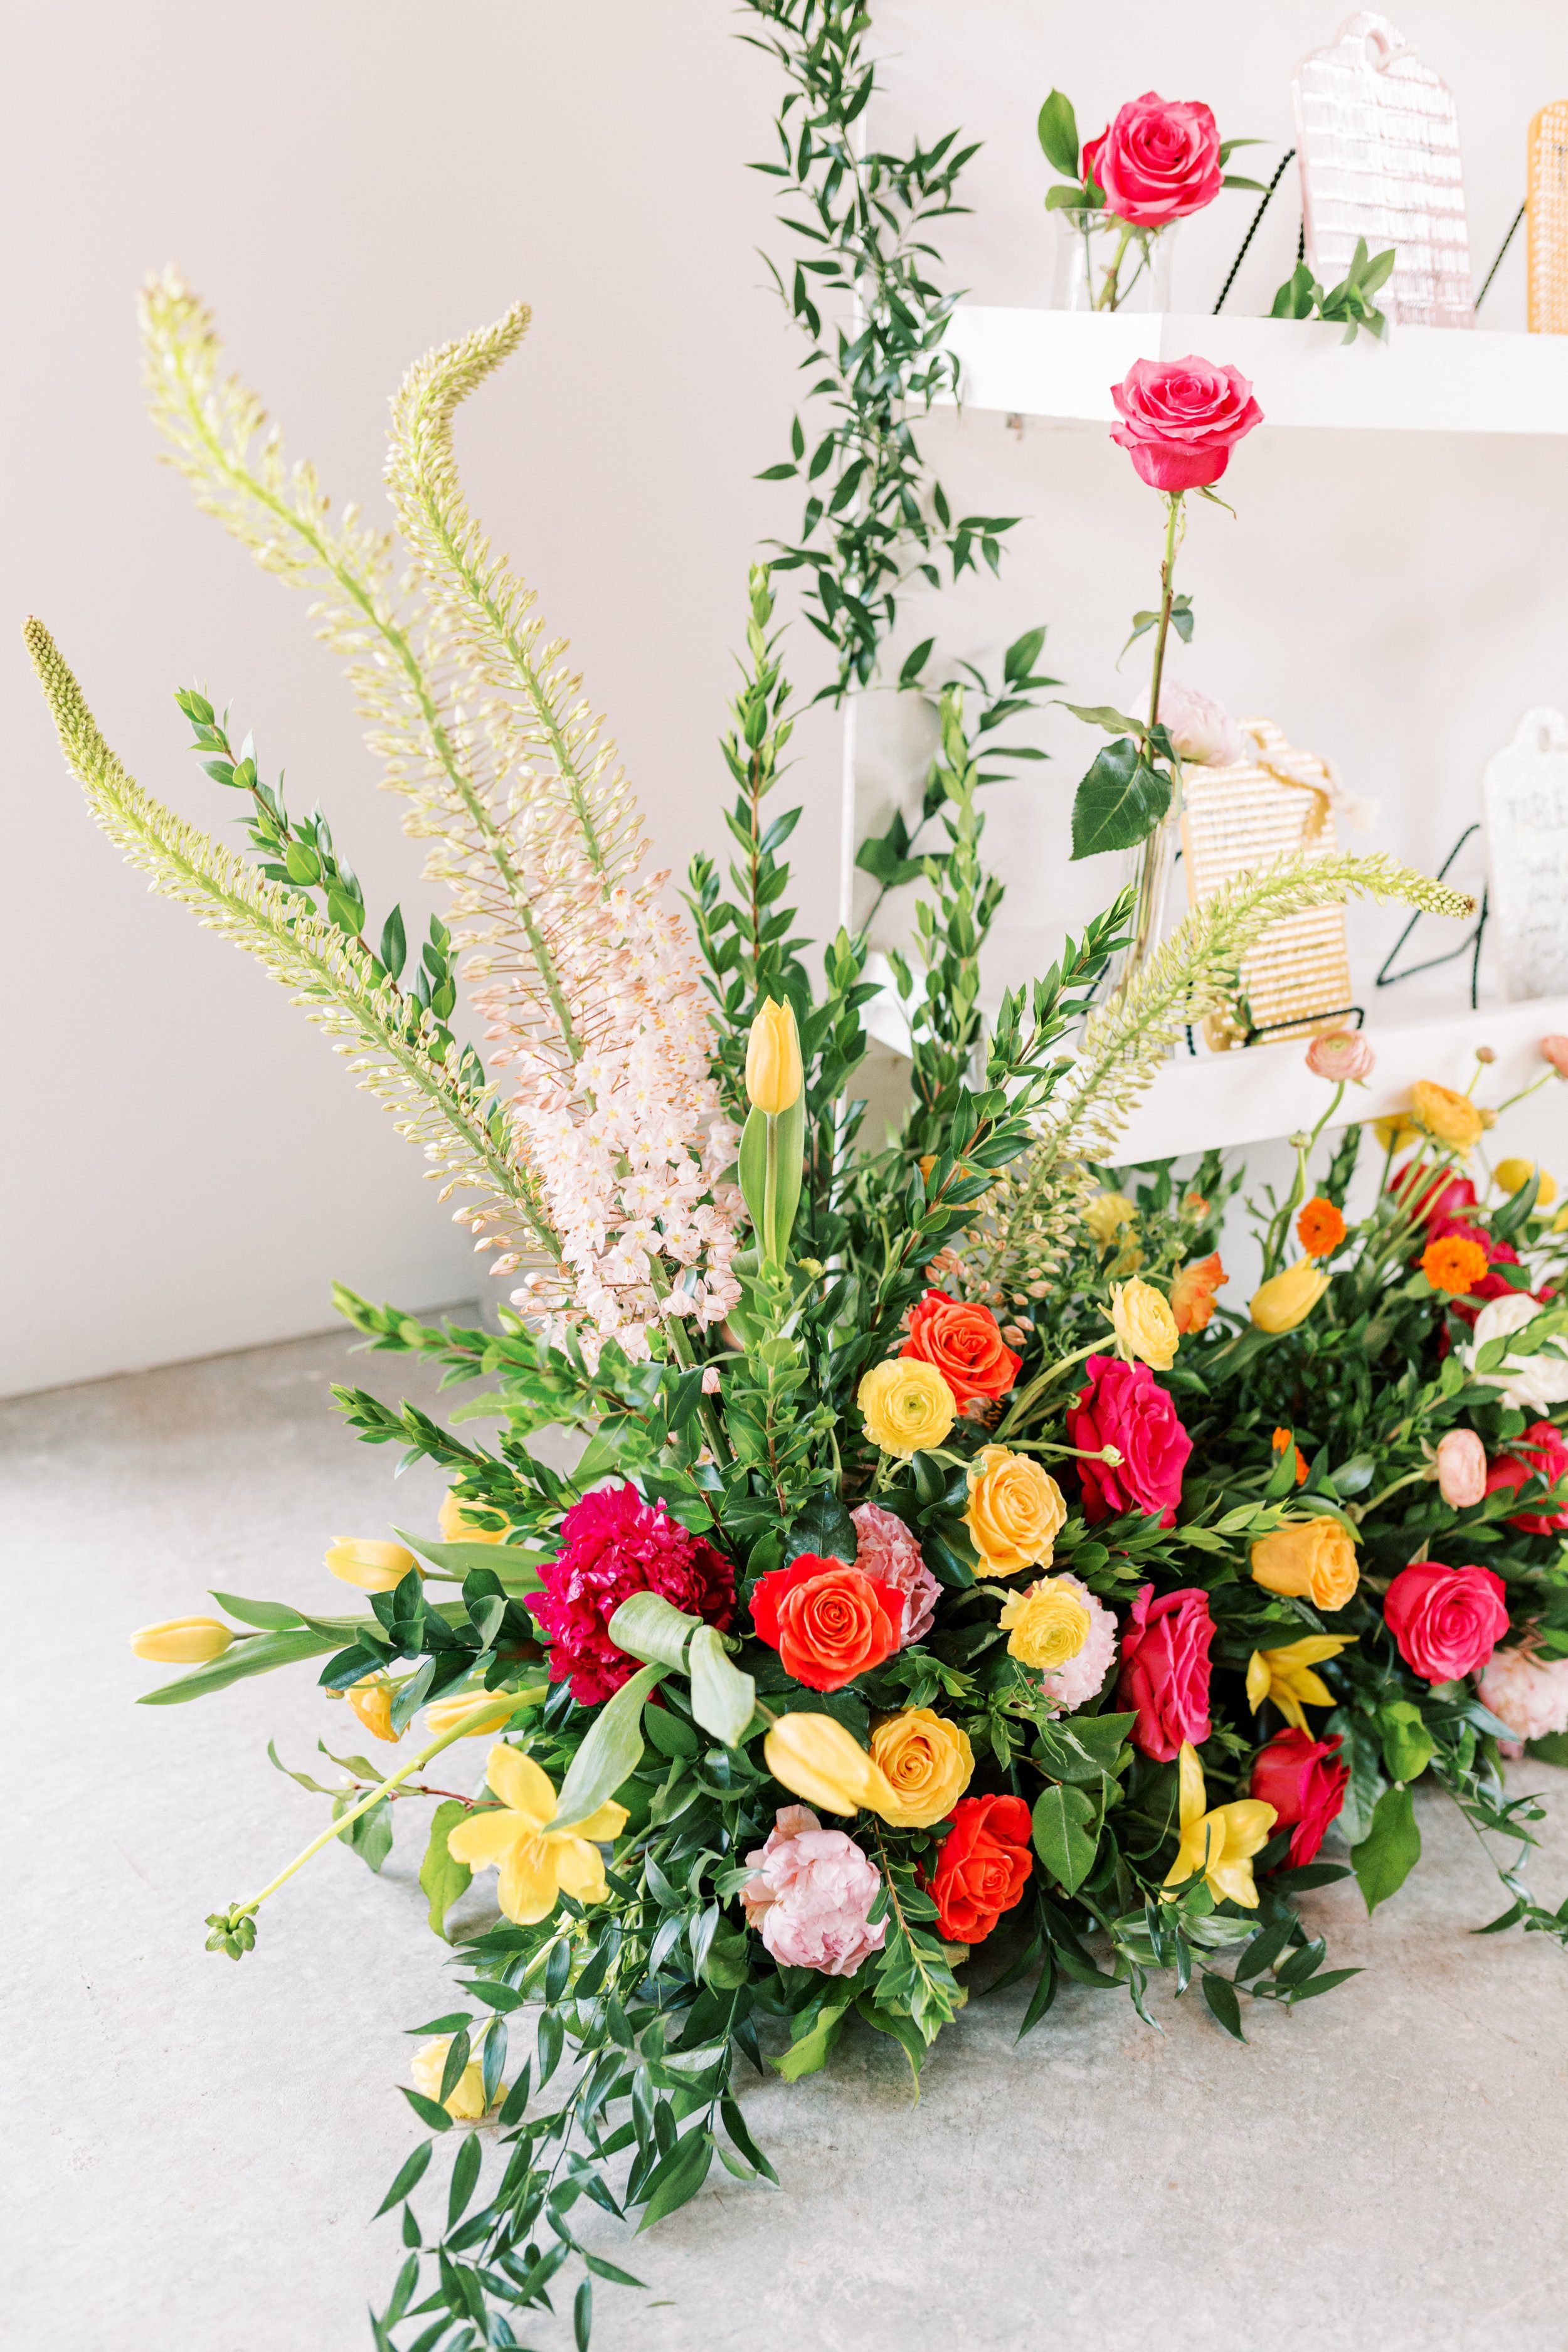 burst-media-floor-arrangement-lae-florals.jpg